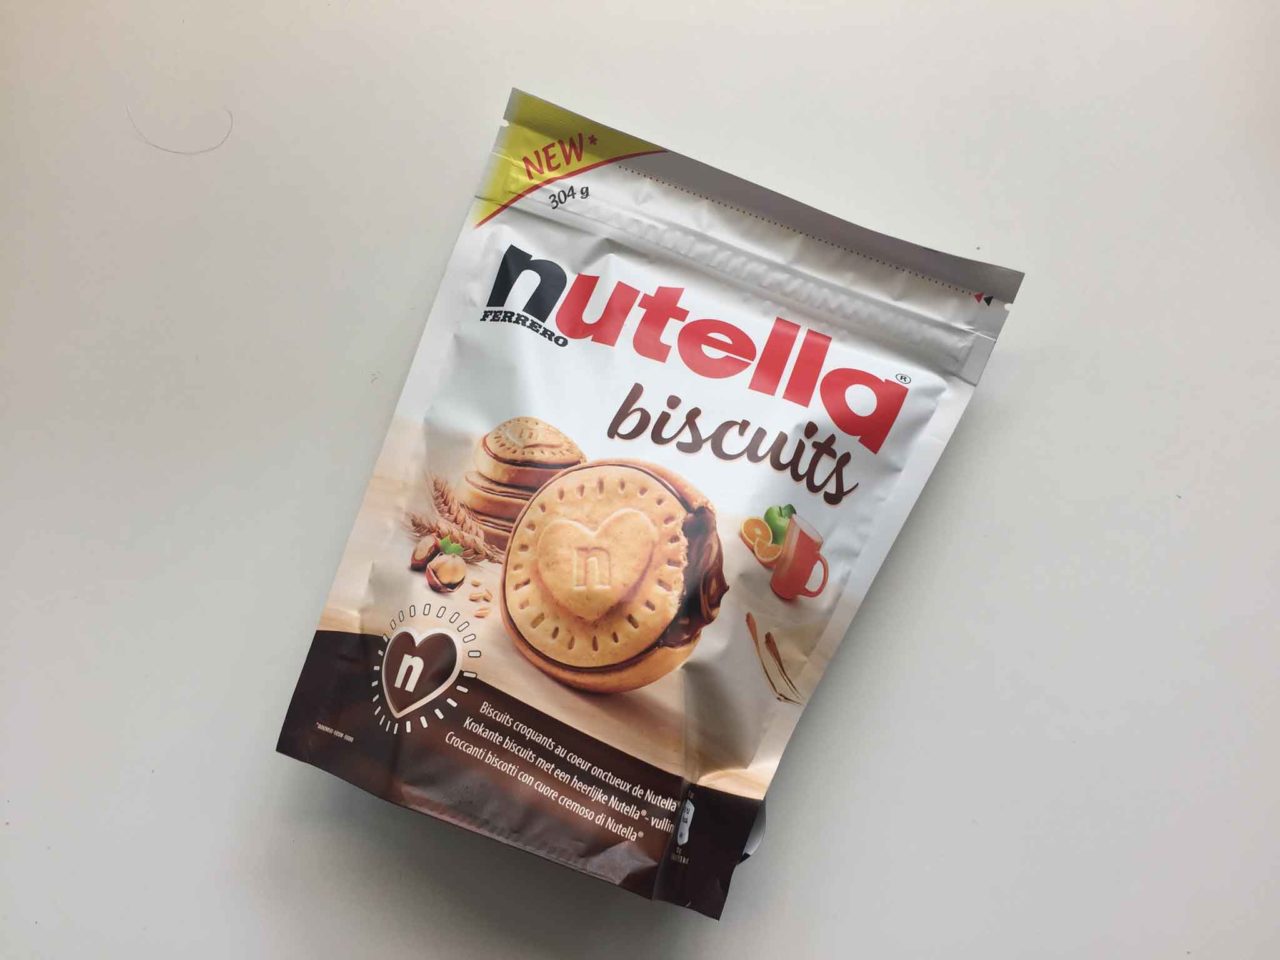 Nutella Biscuits 